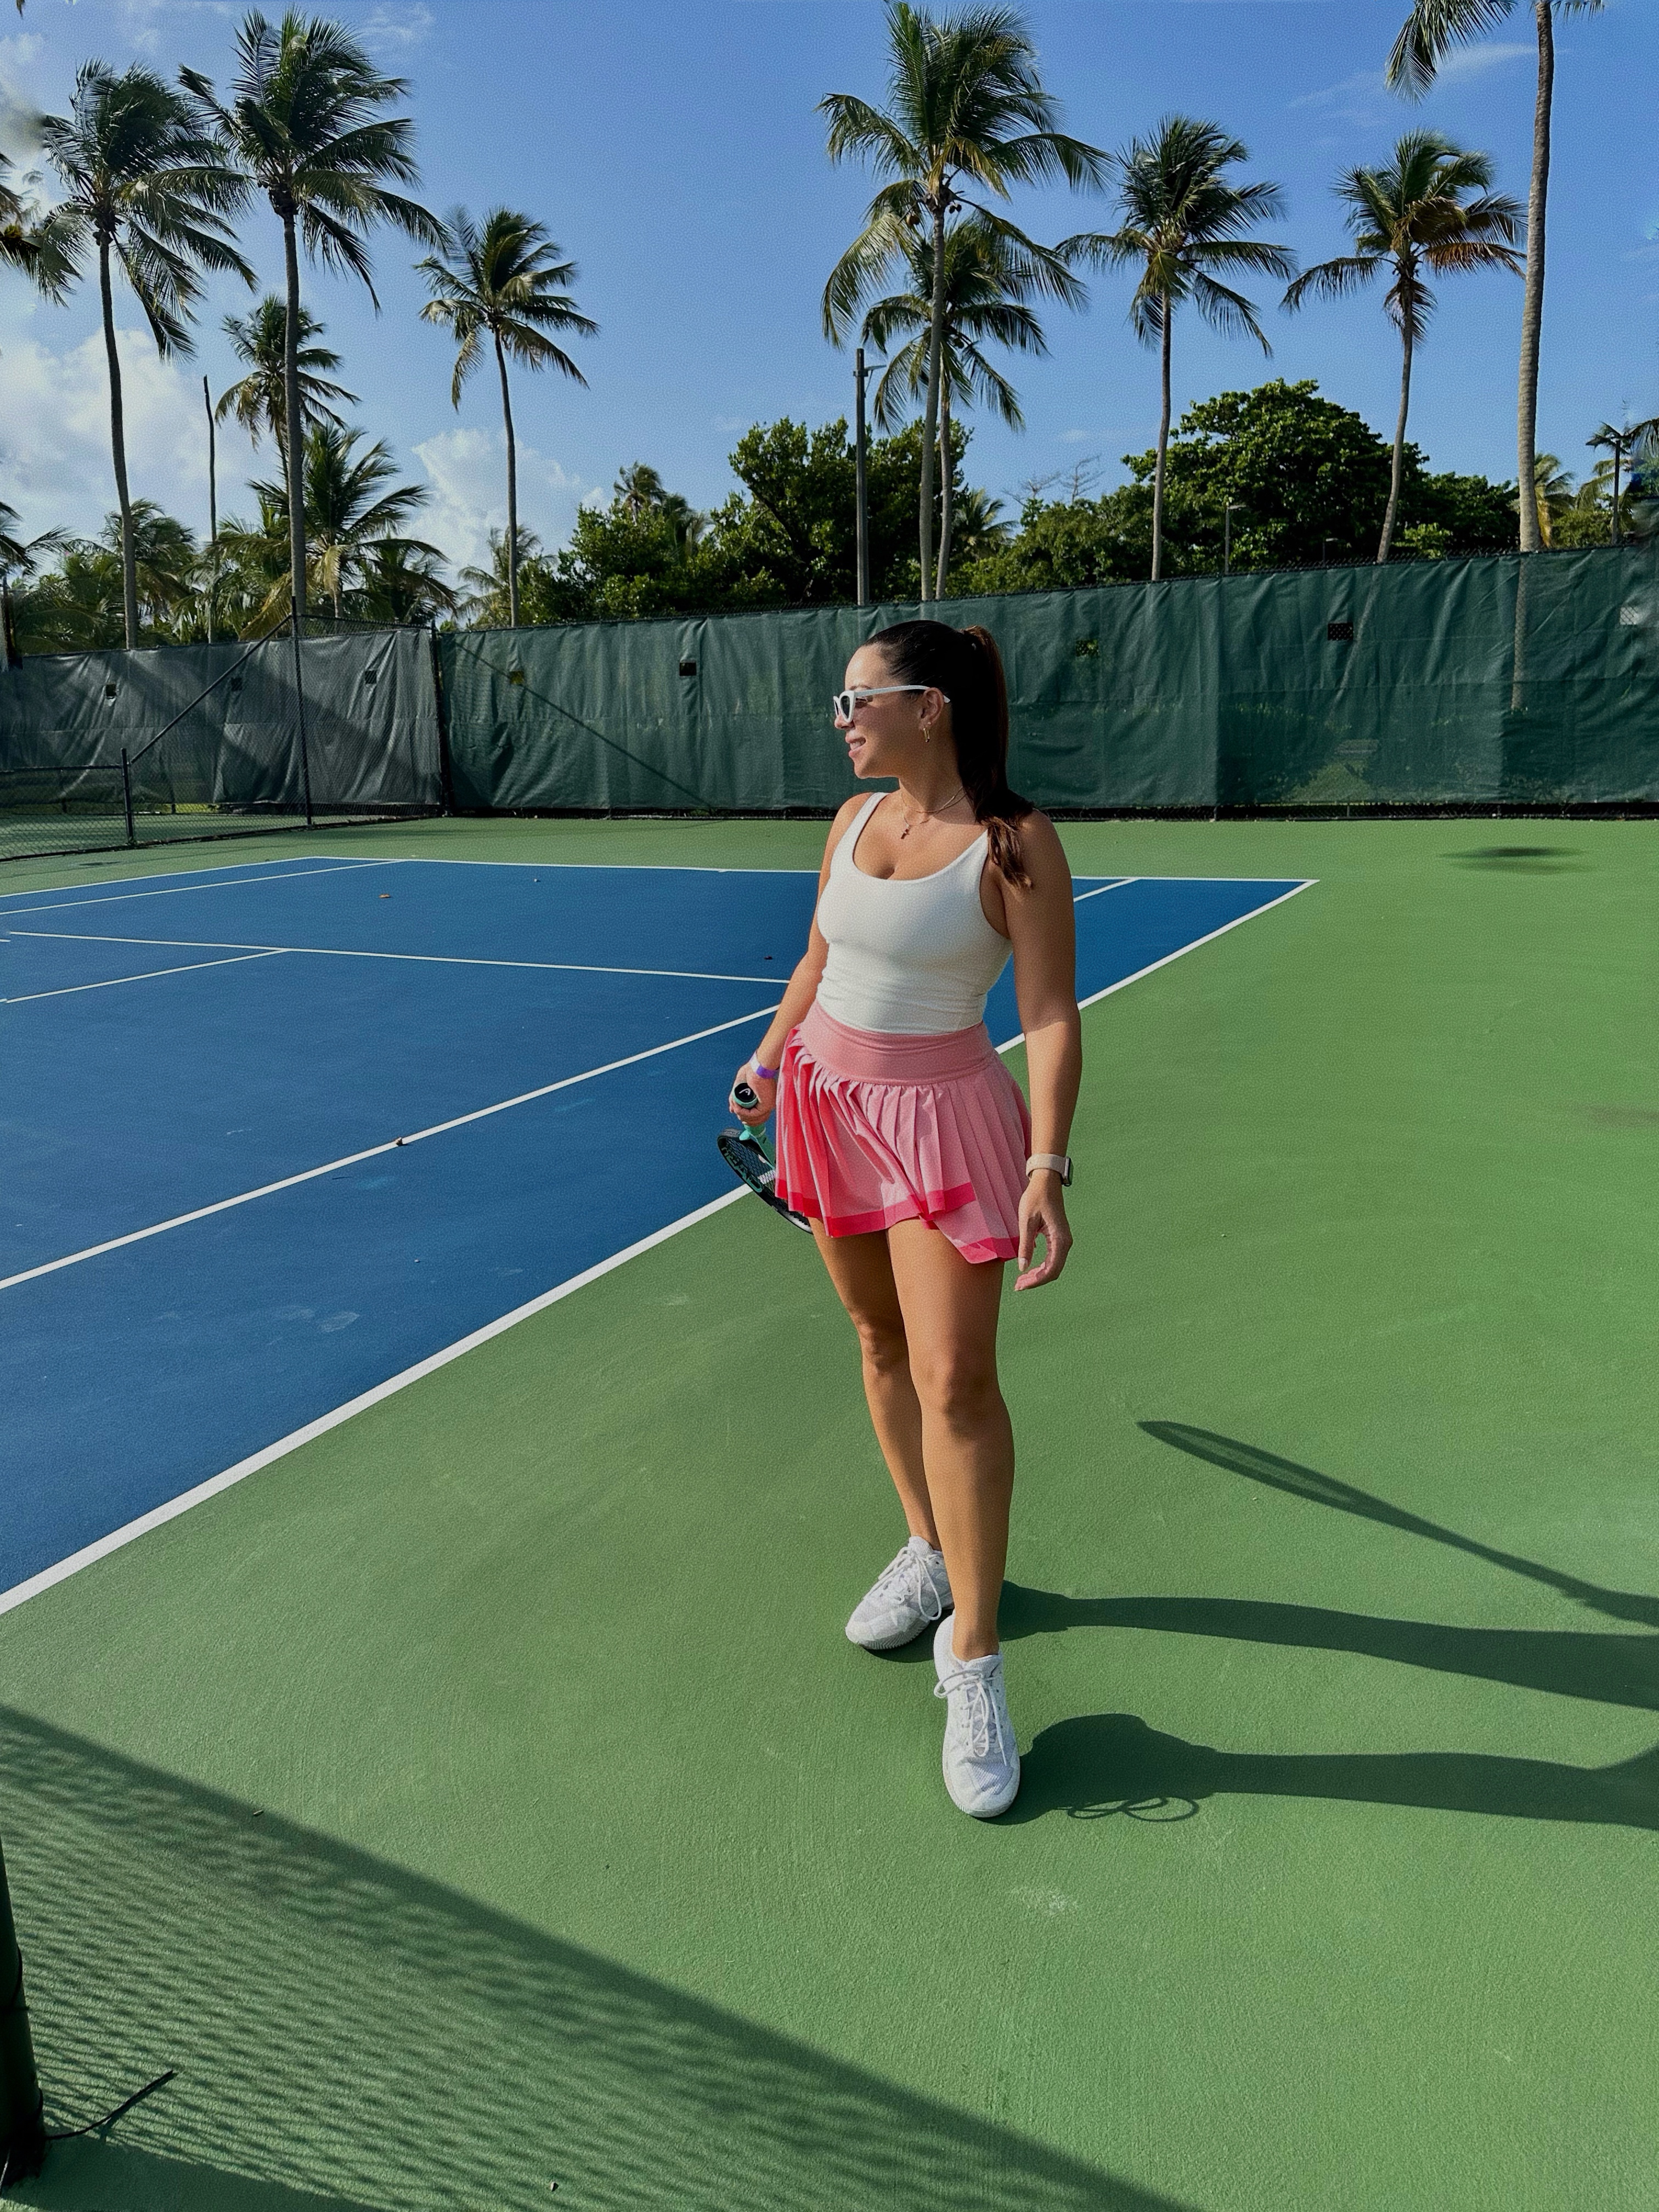 a woman standing on a tennis court